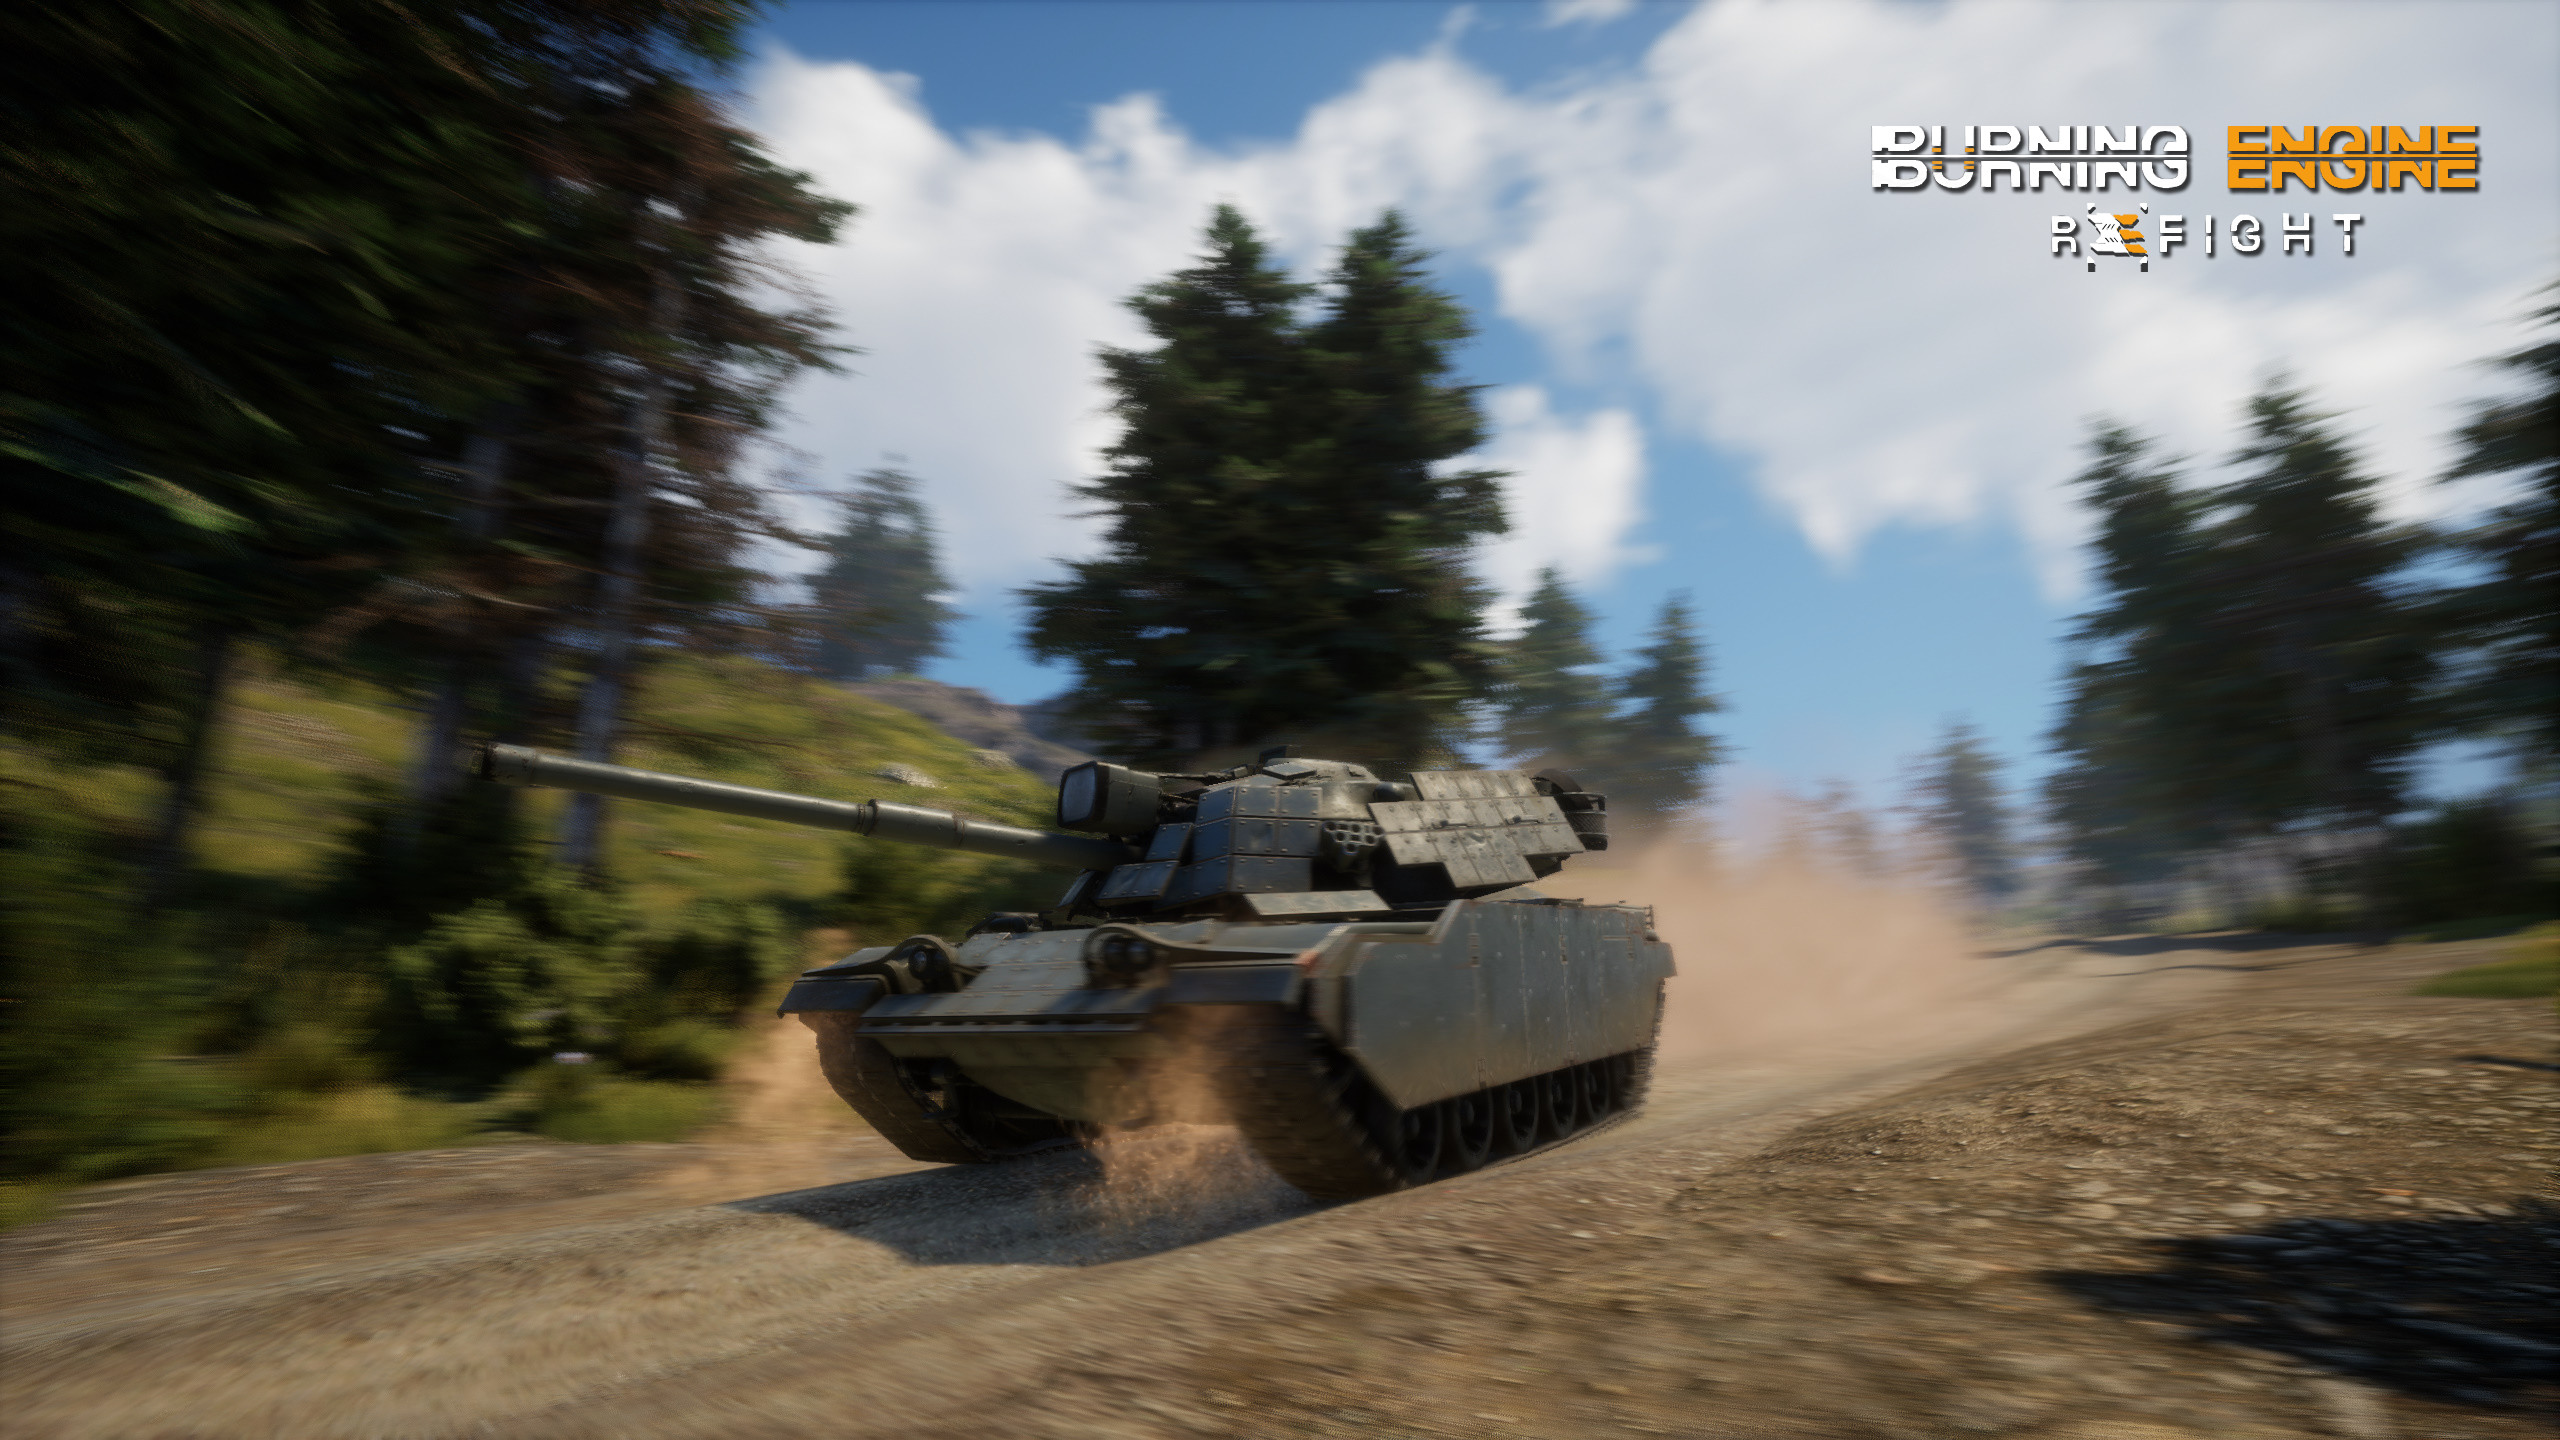 Refight:Burning Engine screenshot